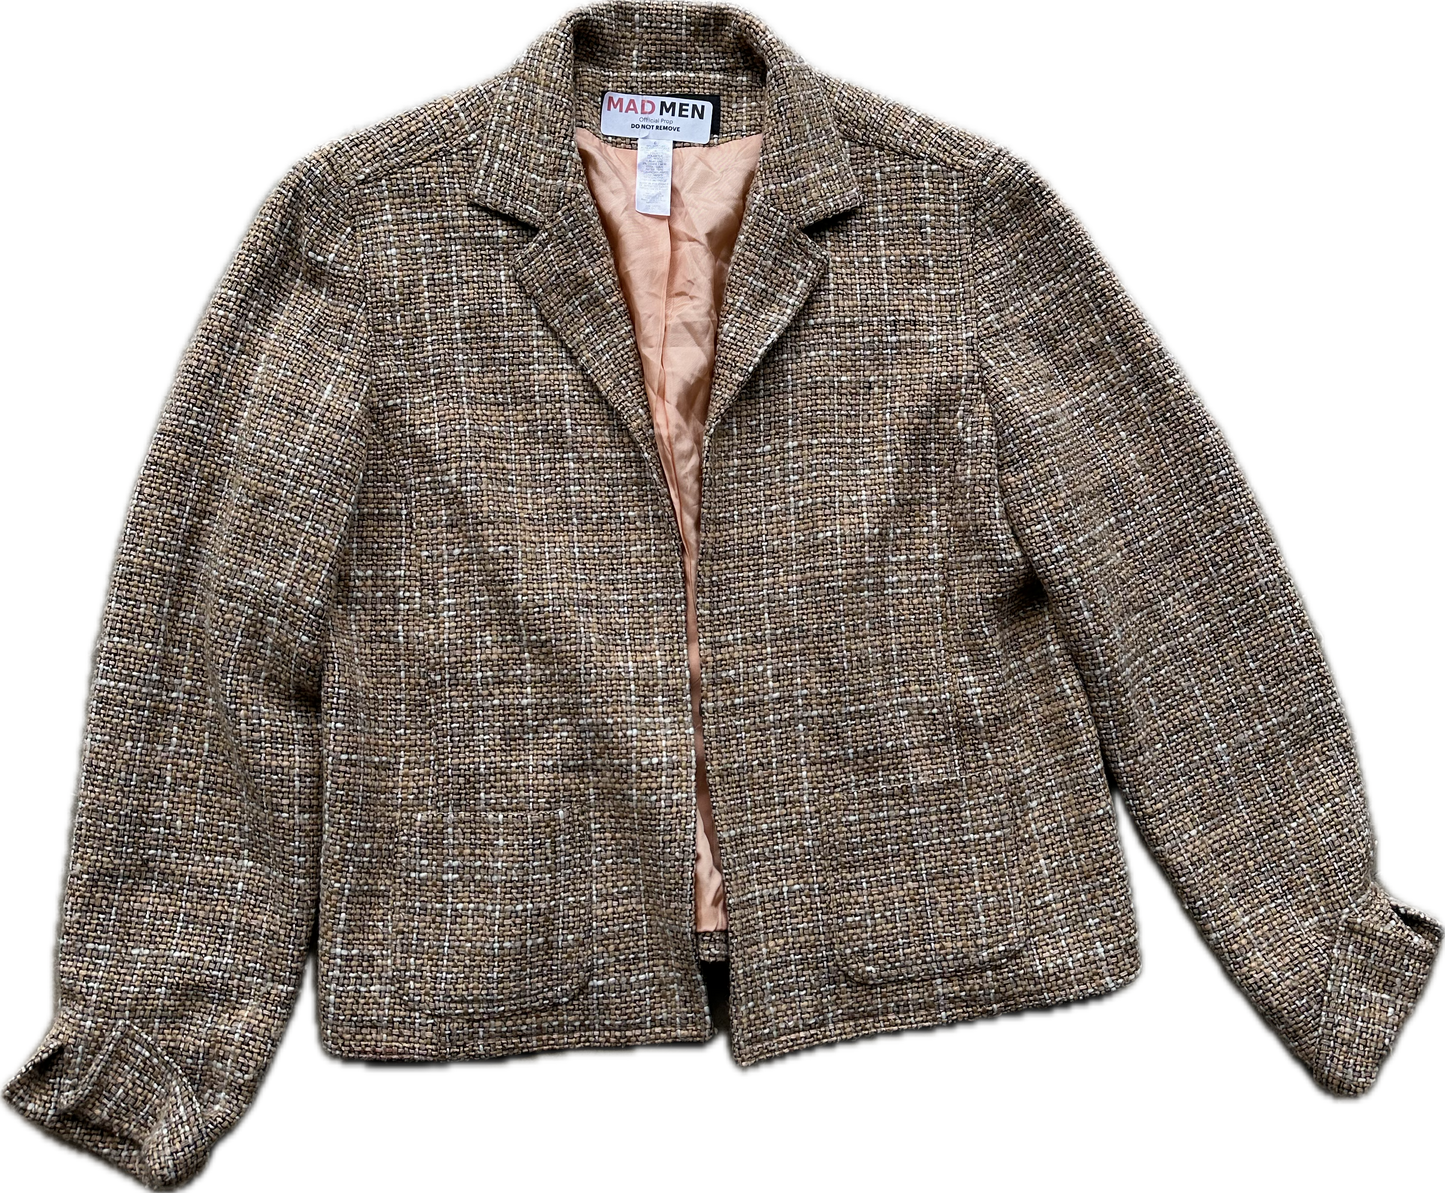 MAD MEN: Peggy Olson's 1960s Style Sport Coat (M)